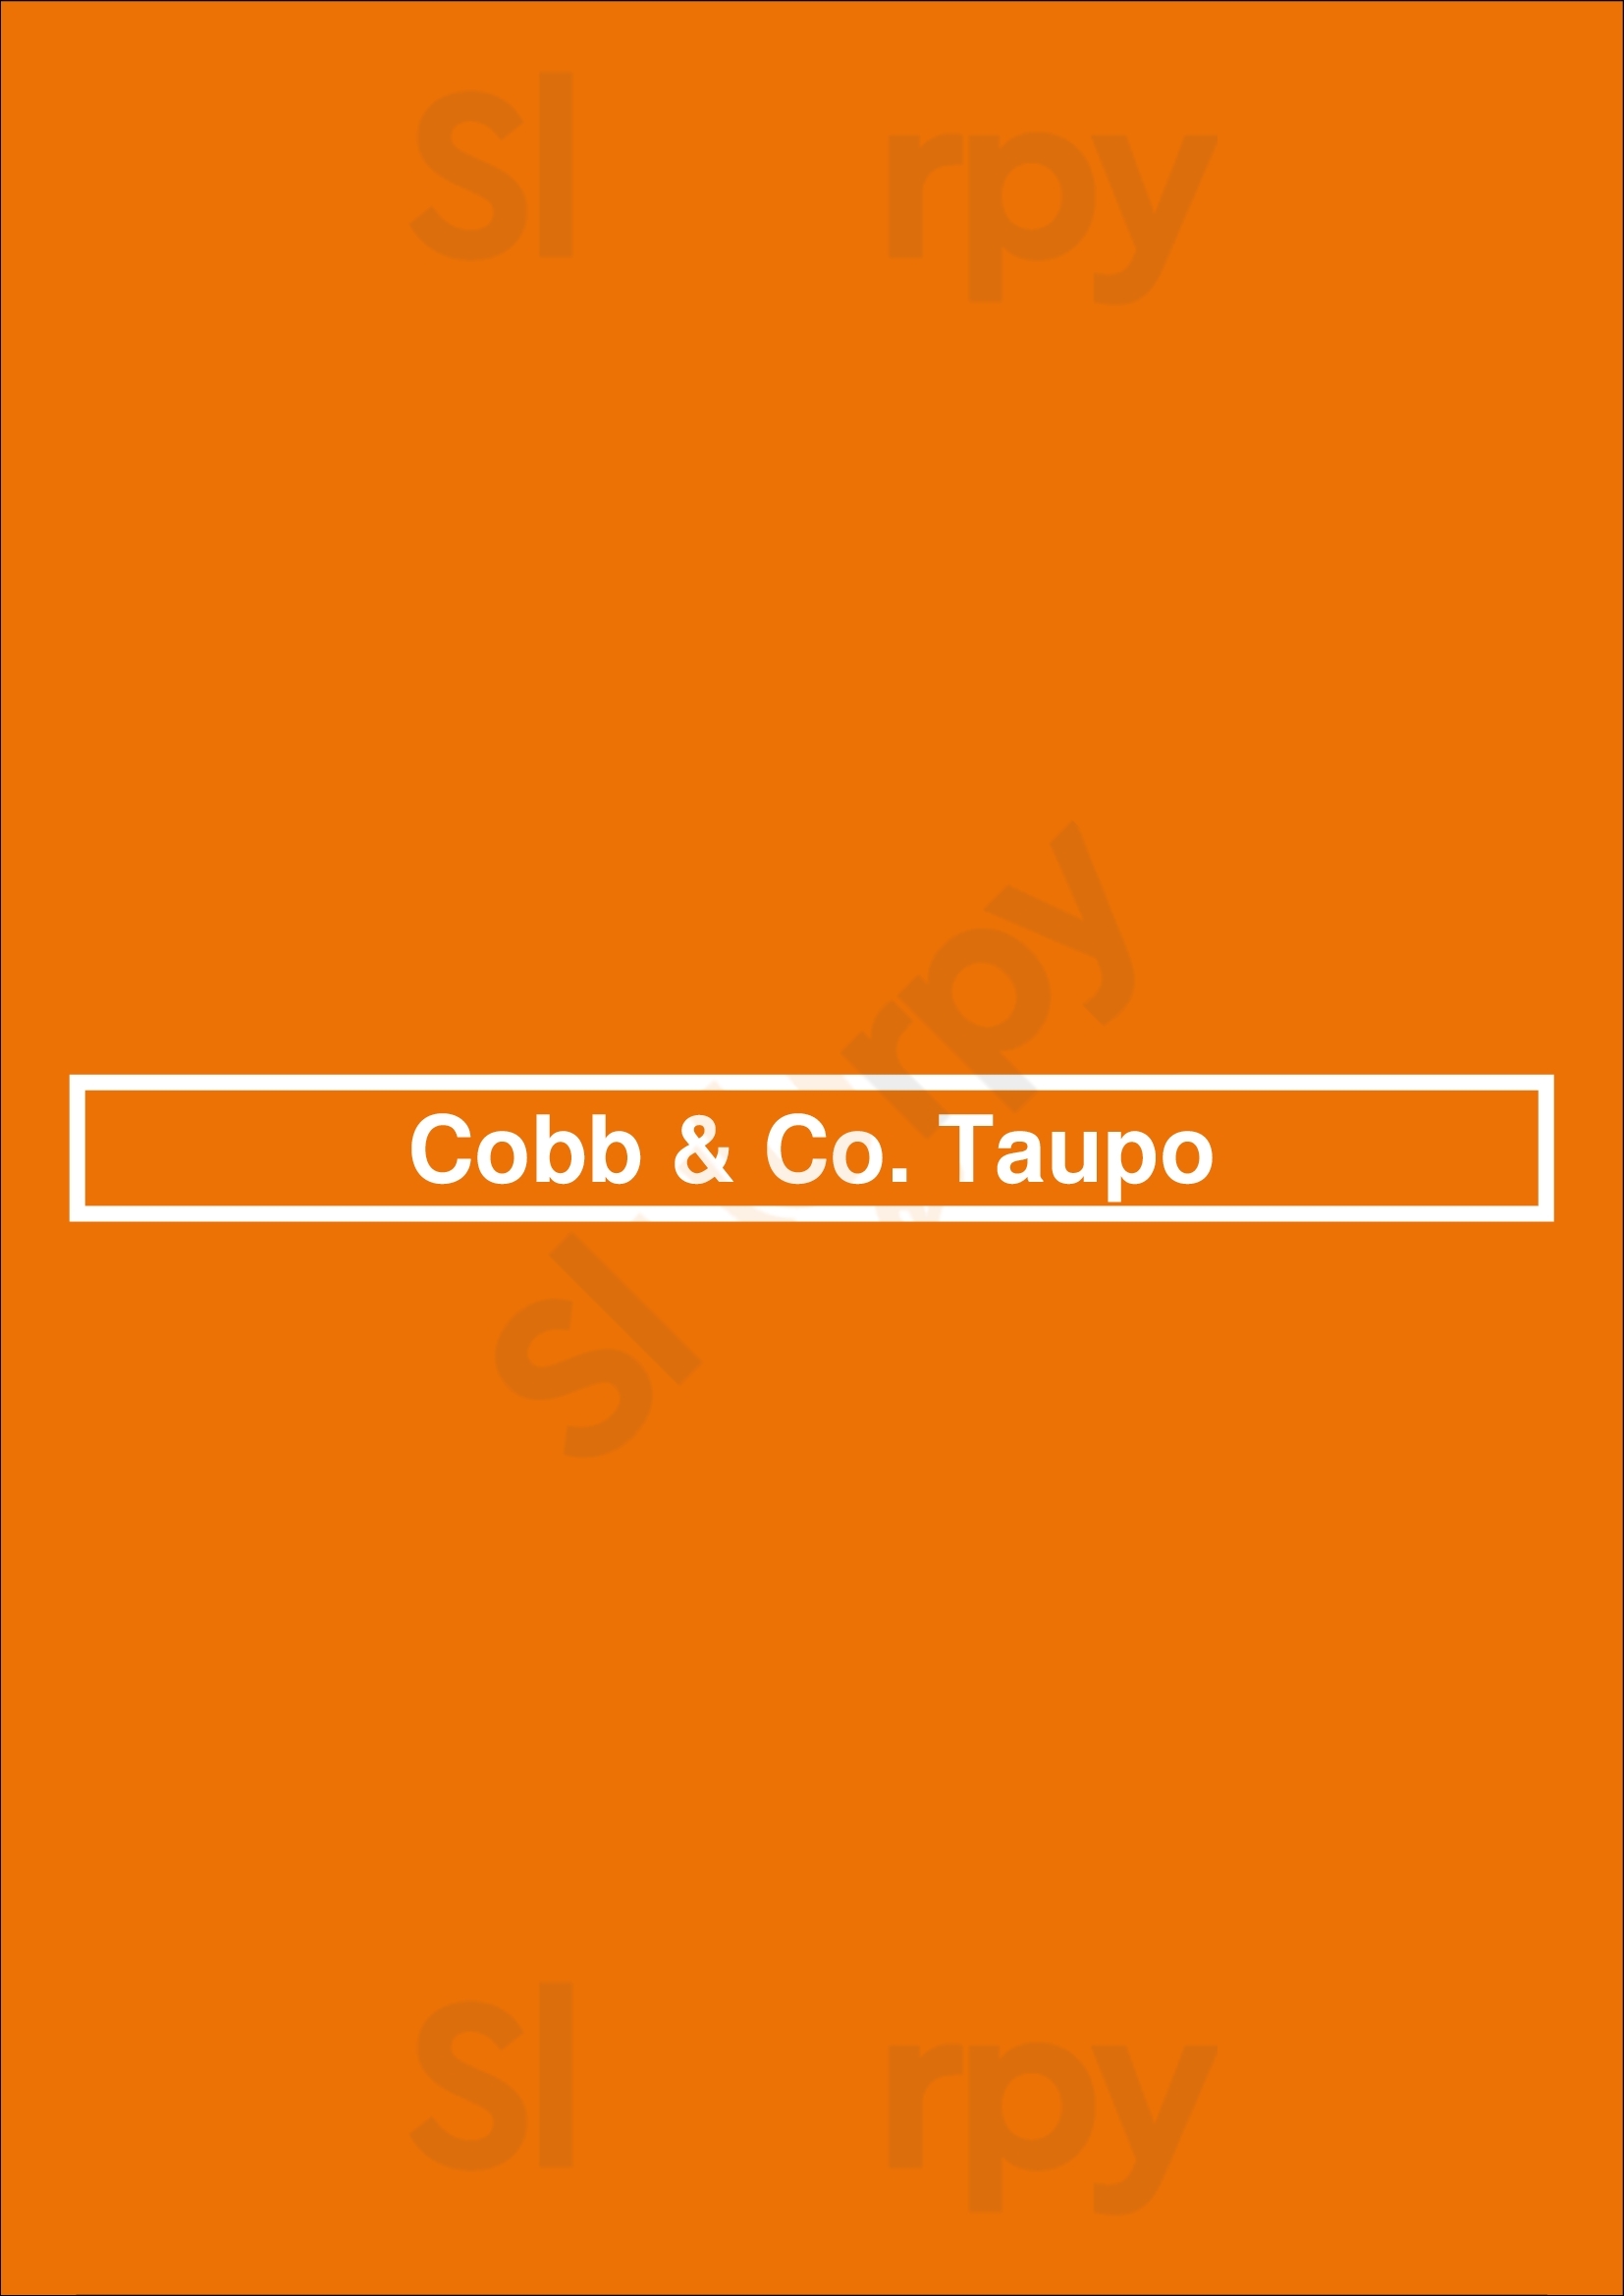 Cobb & Co. Taupo Taupo Menu - 1